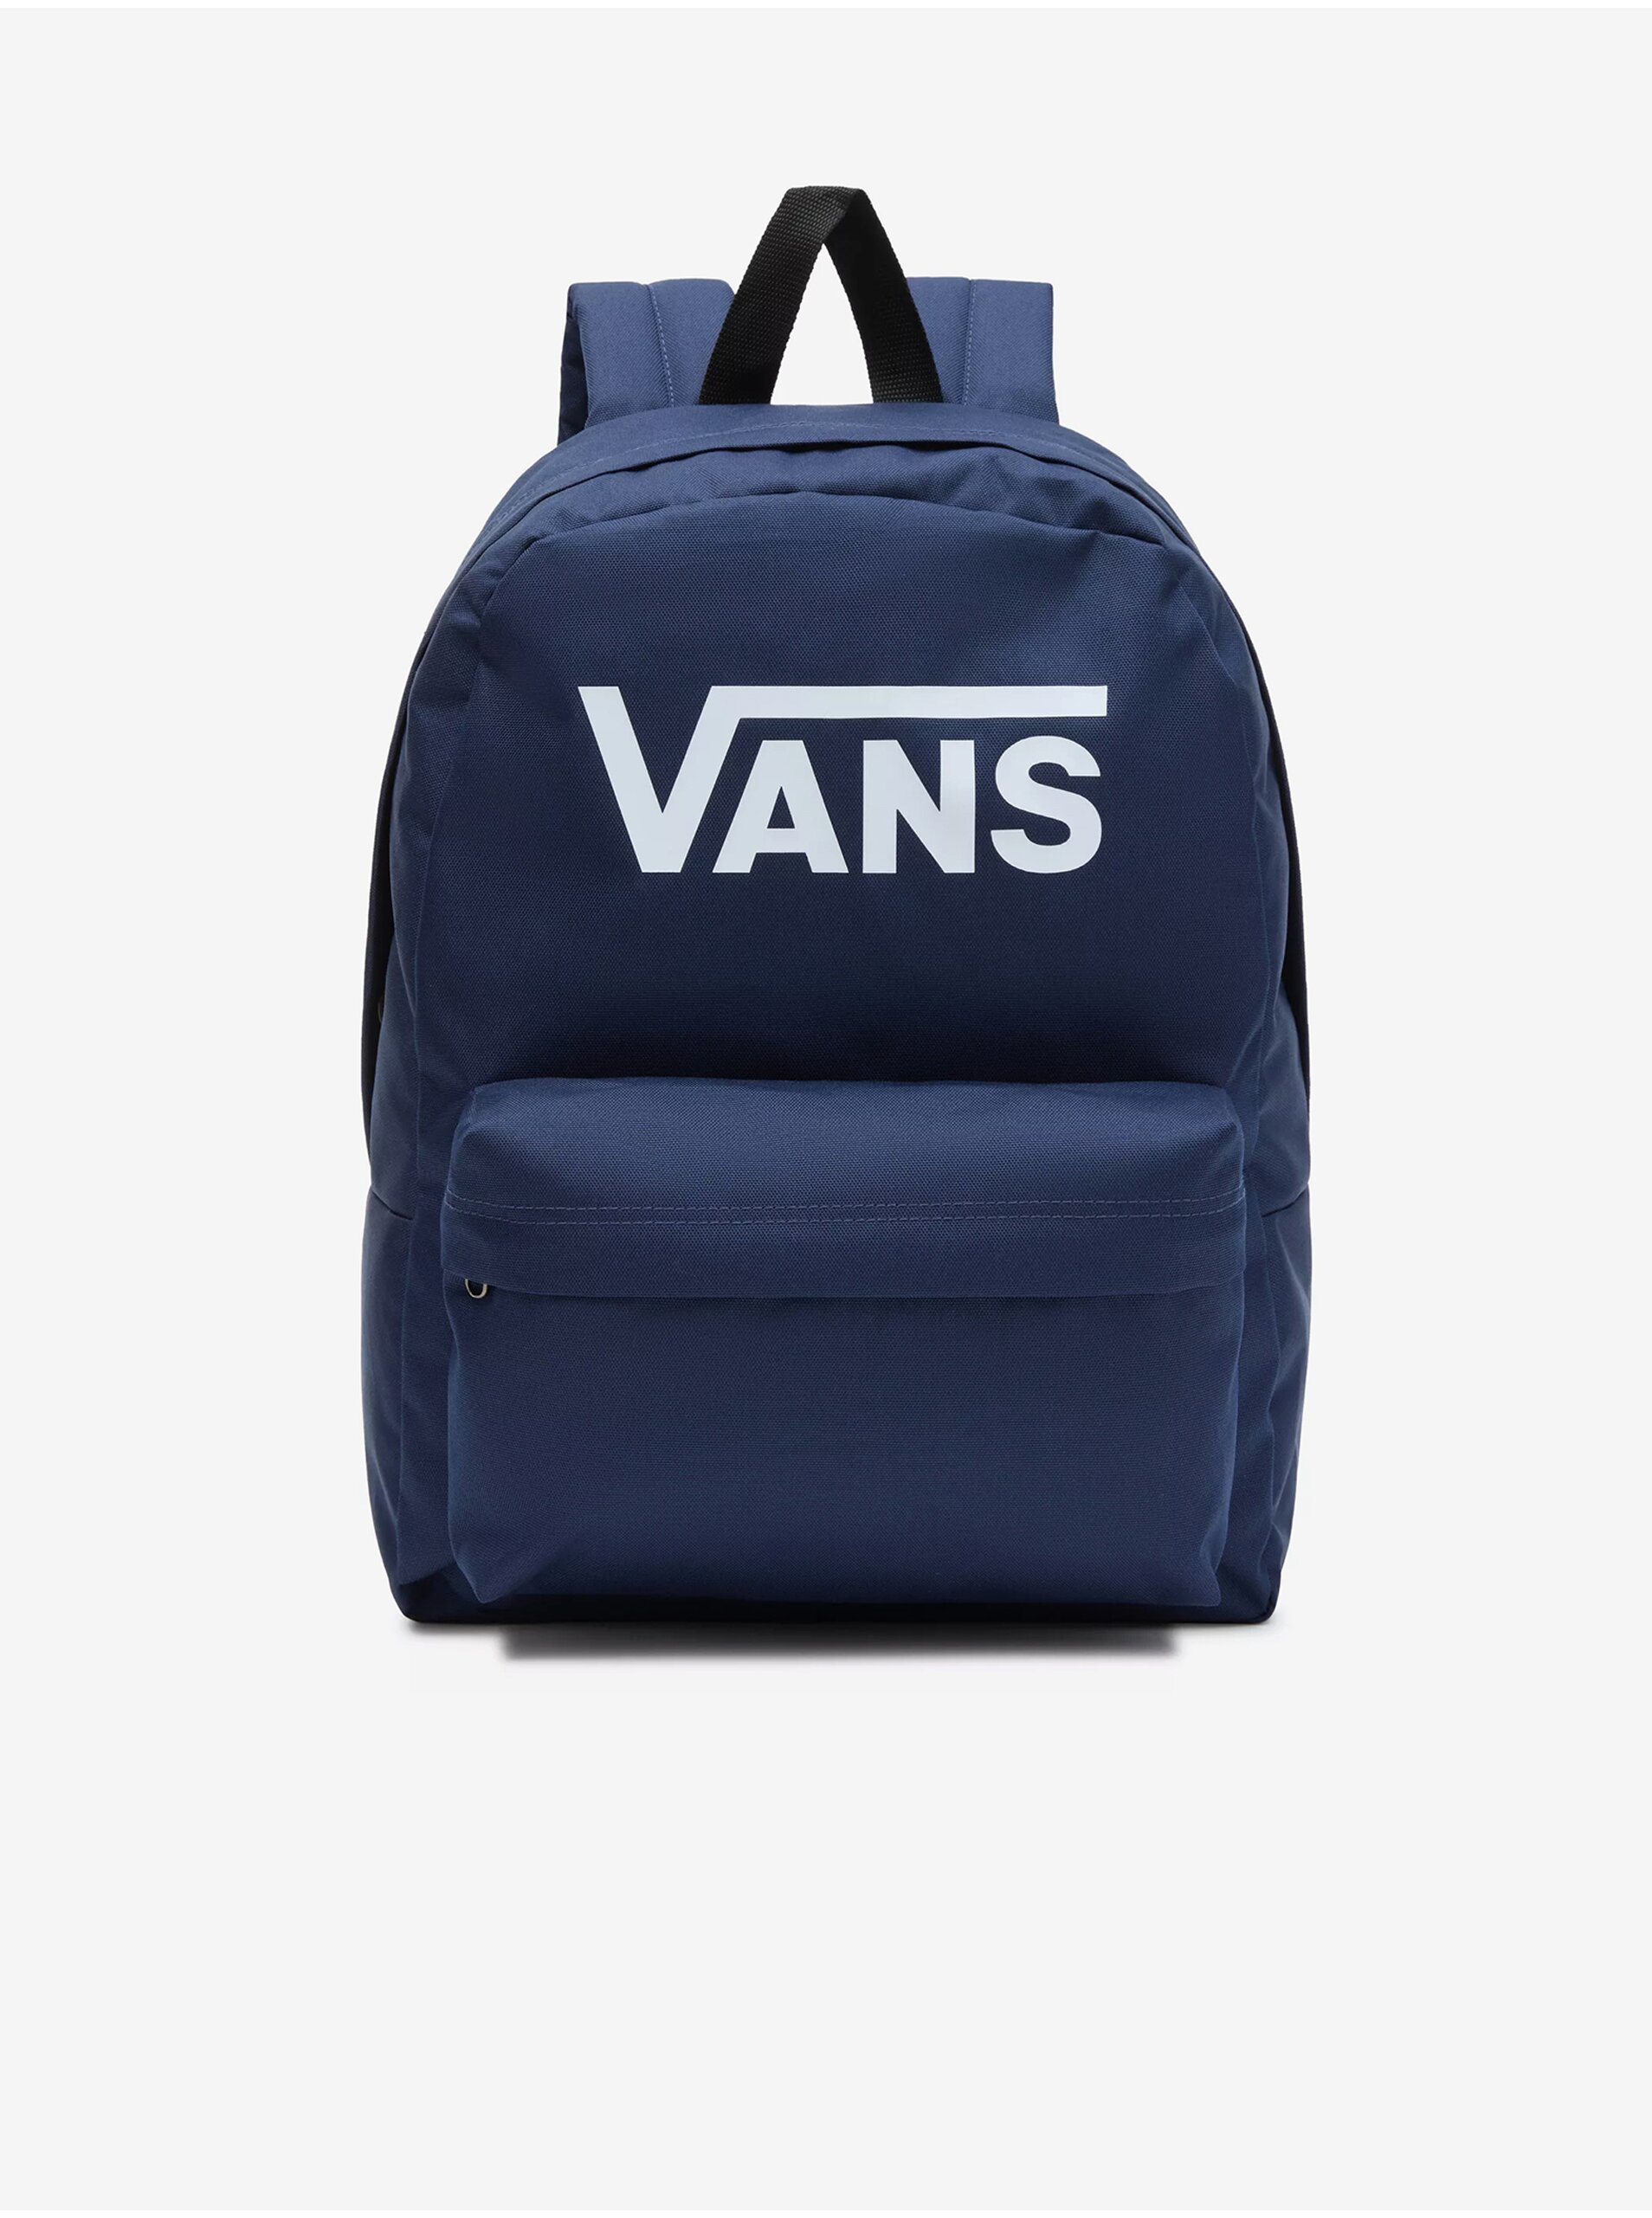 E-shop Tmavě modrý batoh VANS Old Skool